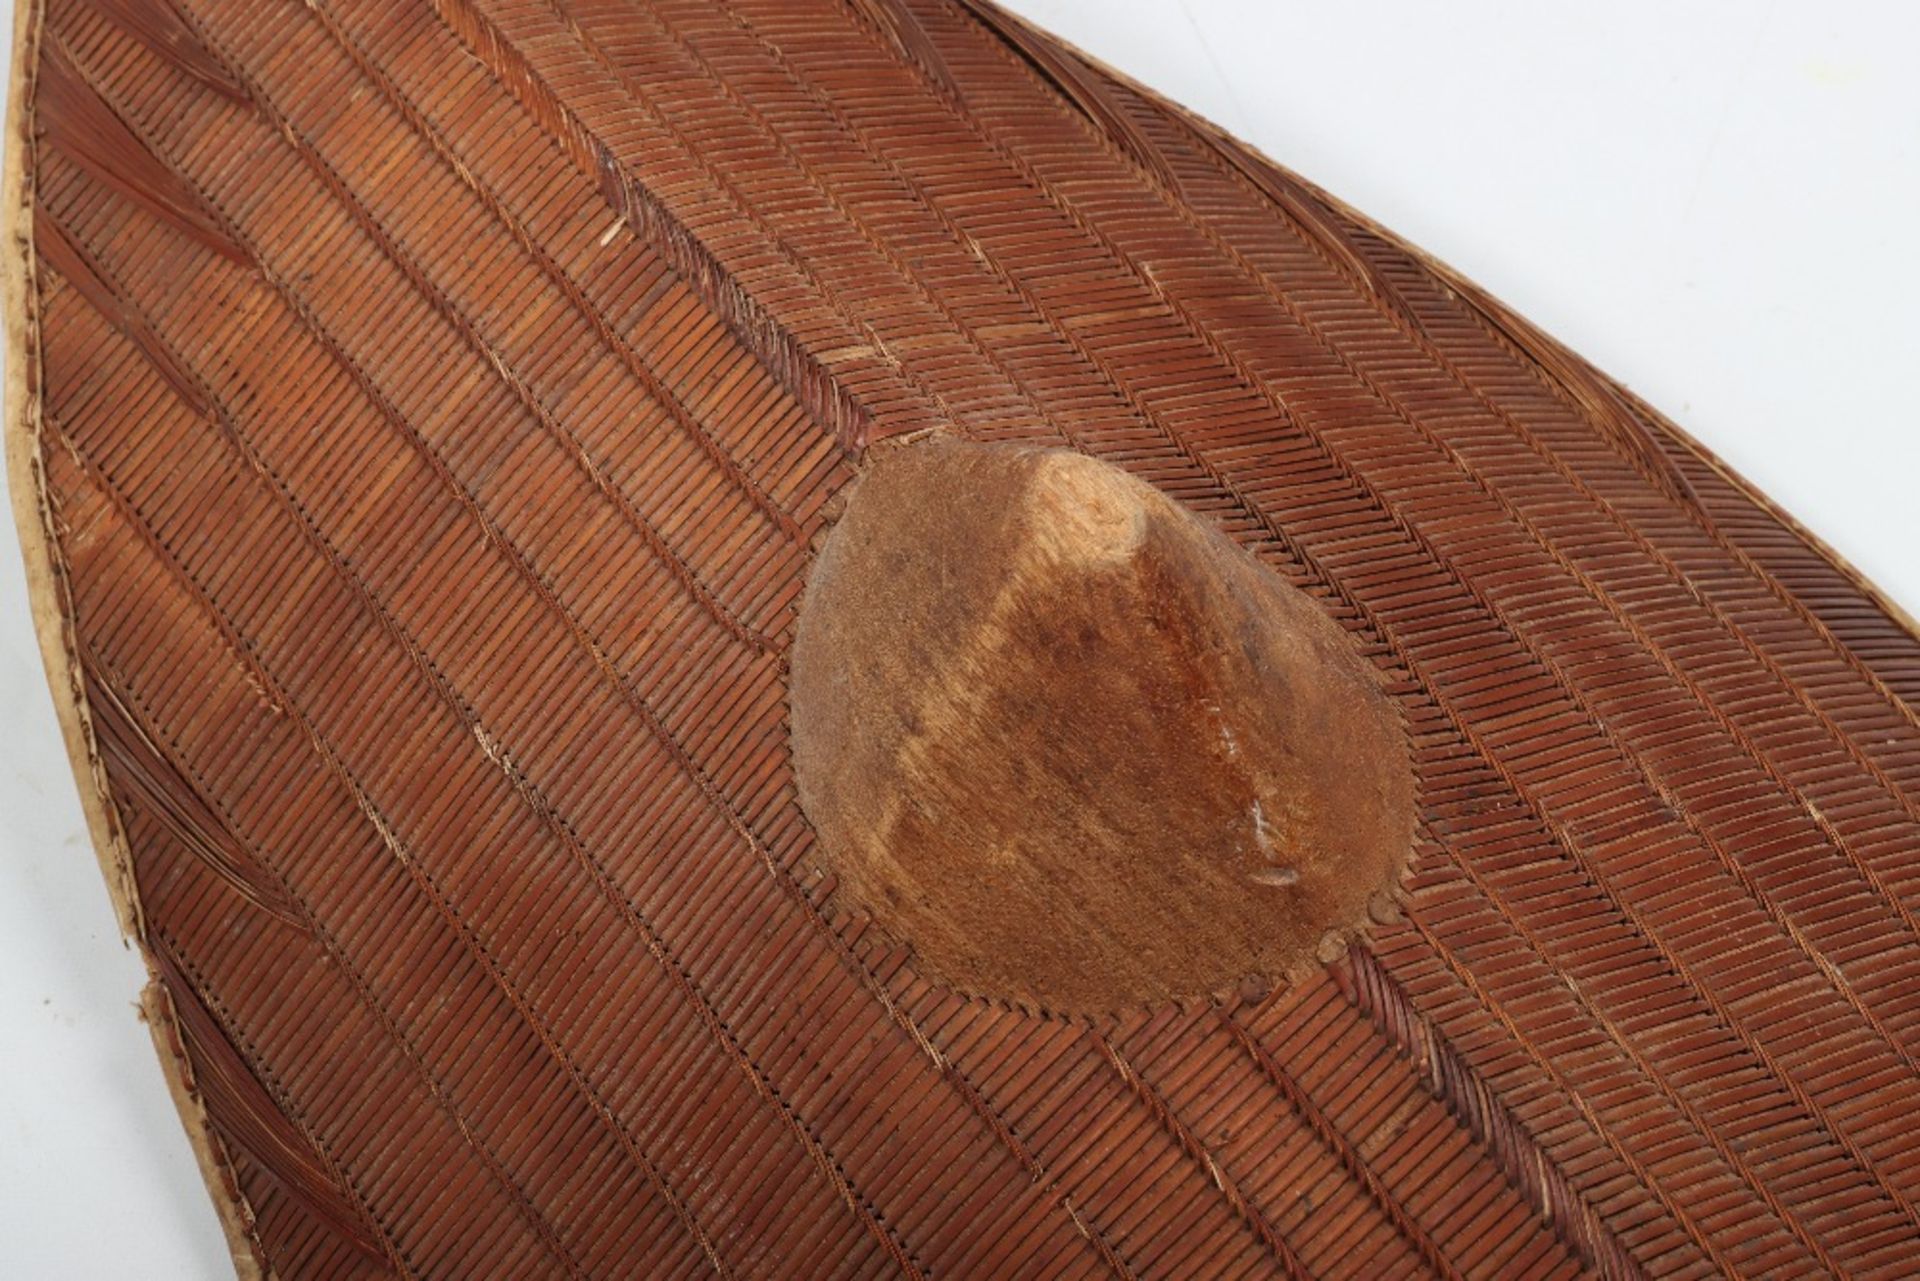 Good Ugandan Wooden Shield of Lenticular Form - Image 3 of 8